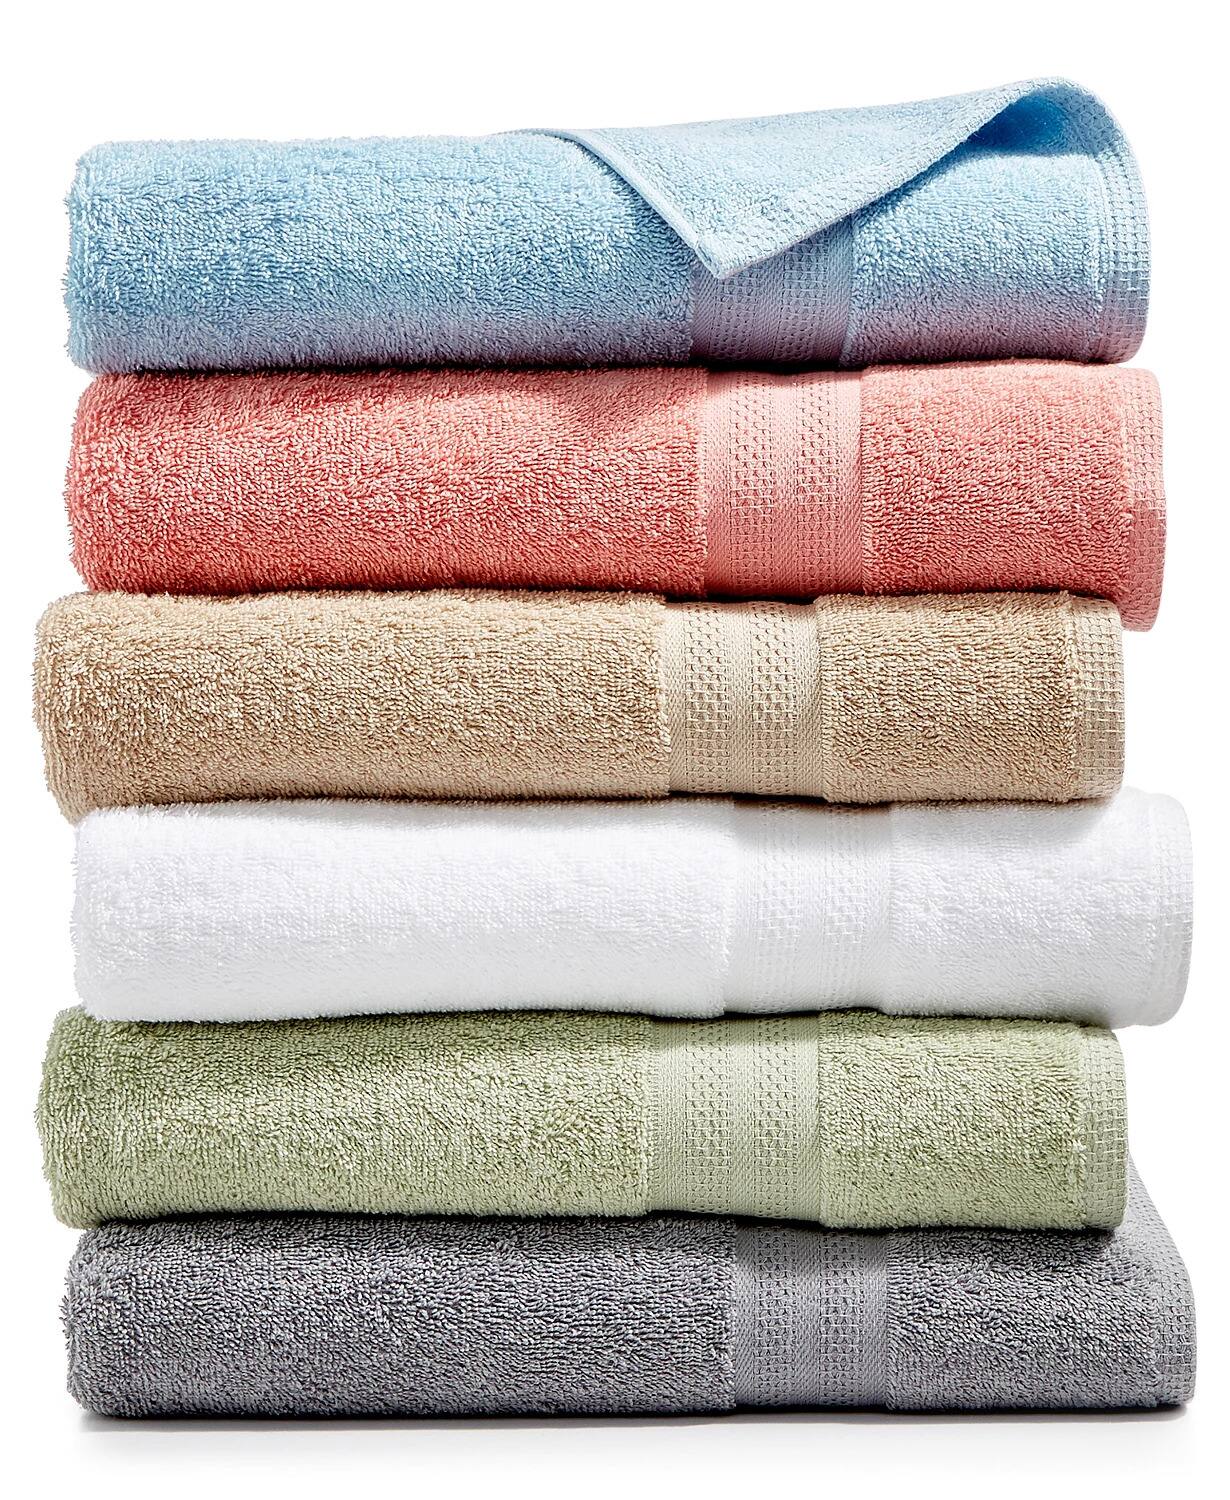 Sunham Soft Spun Cotton Towels: Washcloth $2, Hand $2, Bath $3 & More + Free Store Pickup at Macys